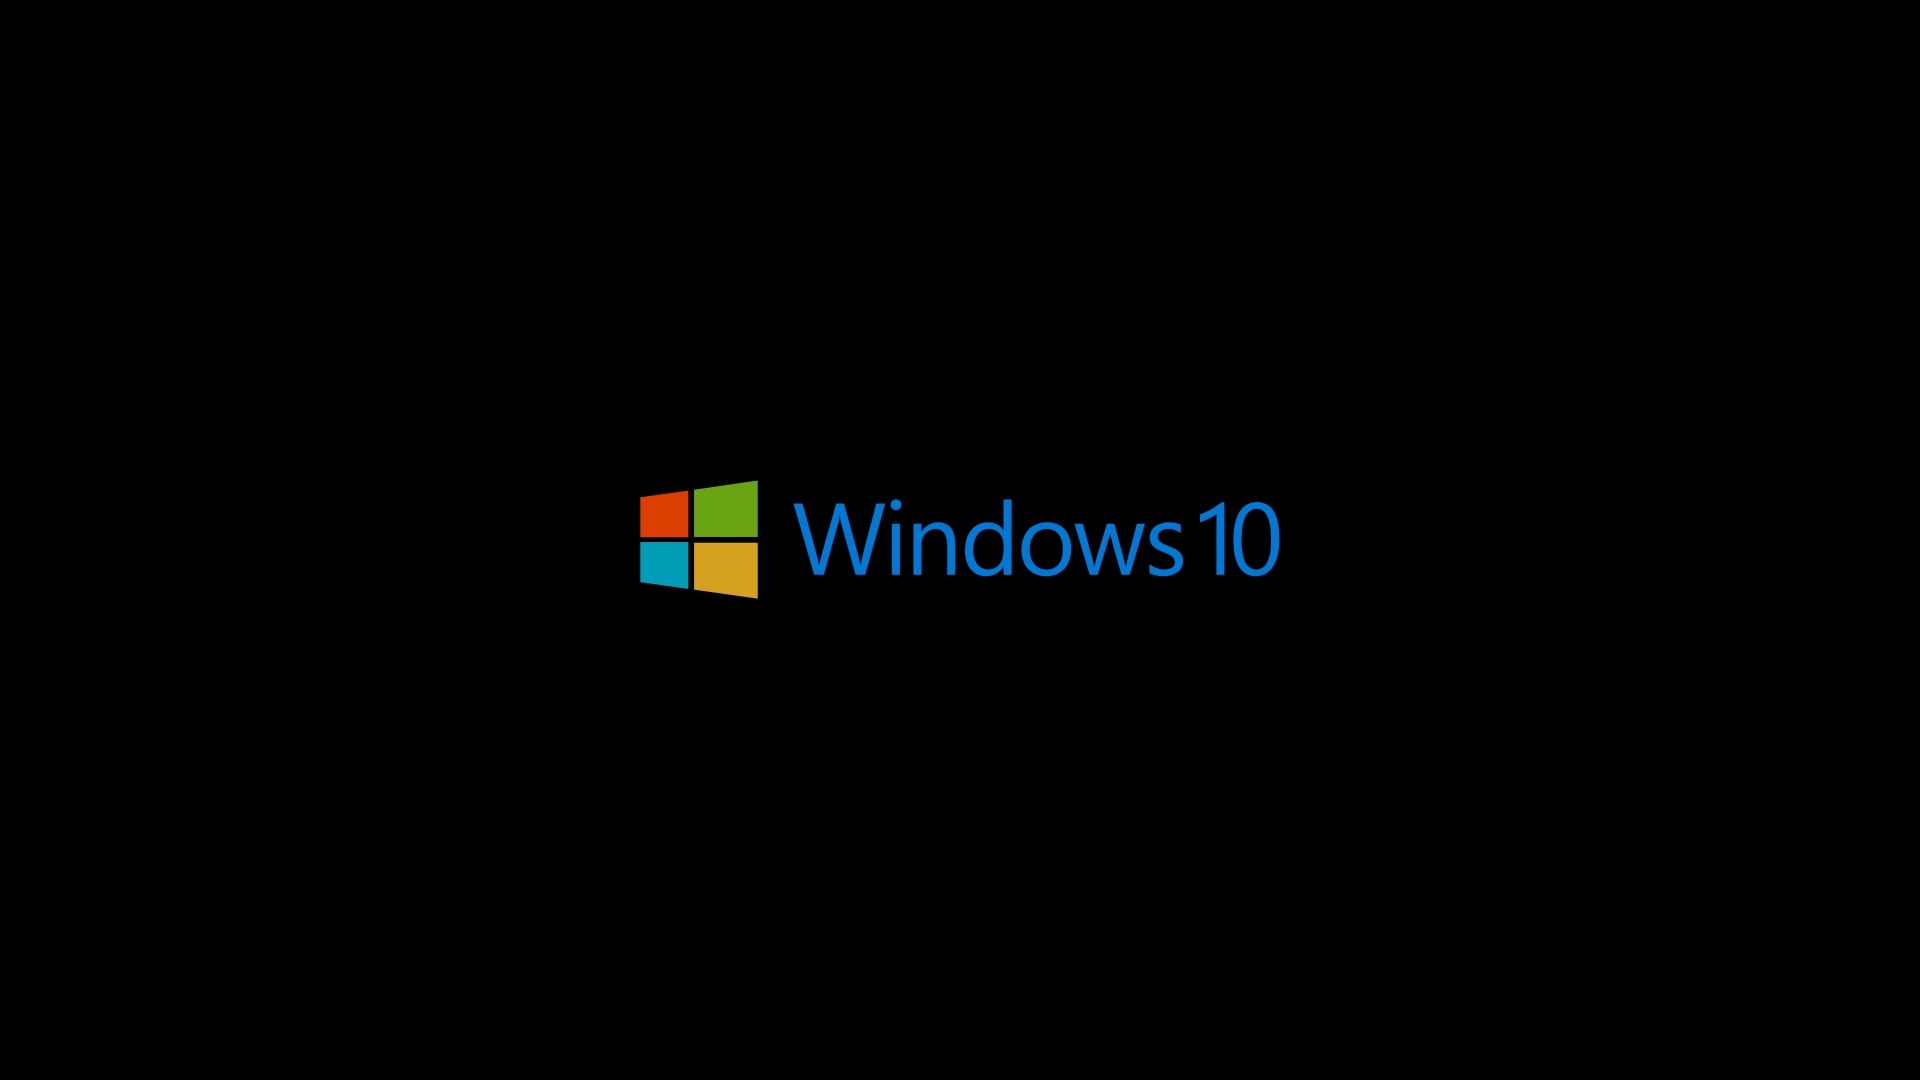 windows 10-wallpaper-1920x1080.jpg